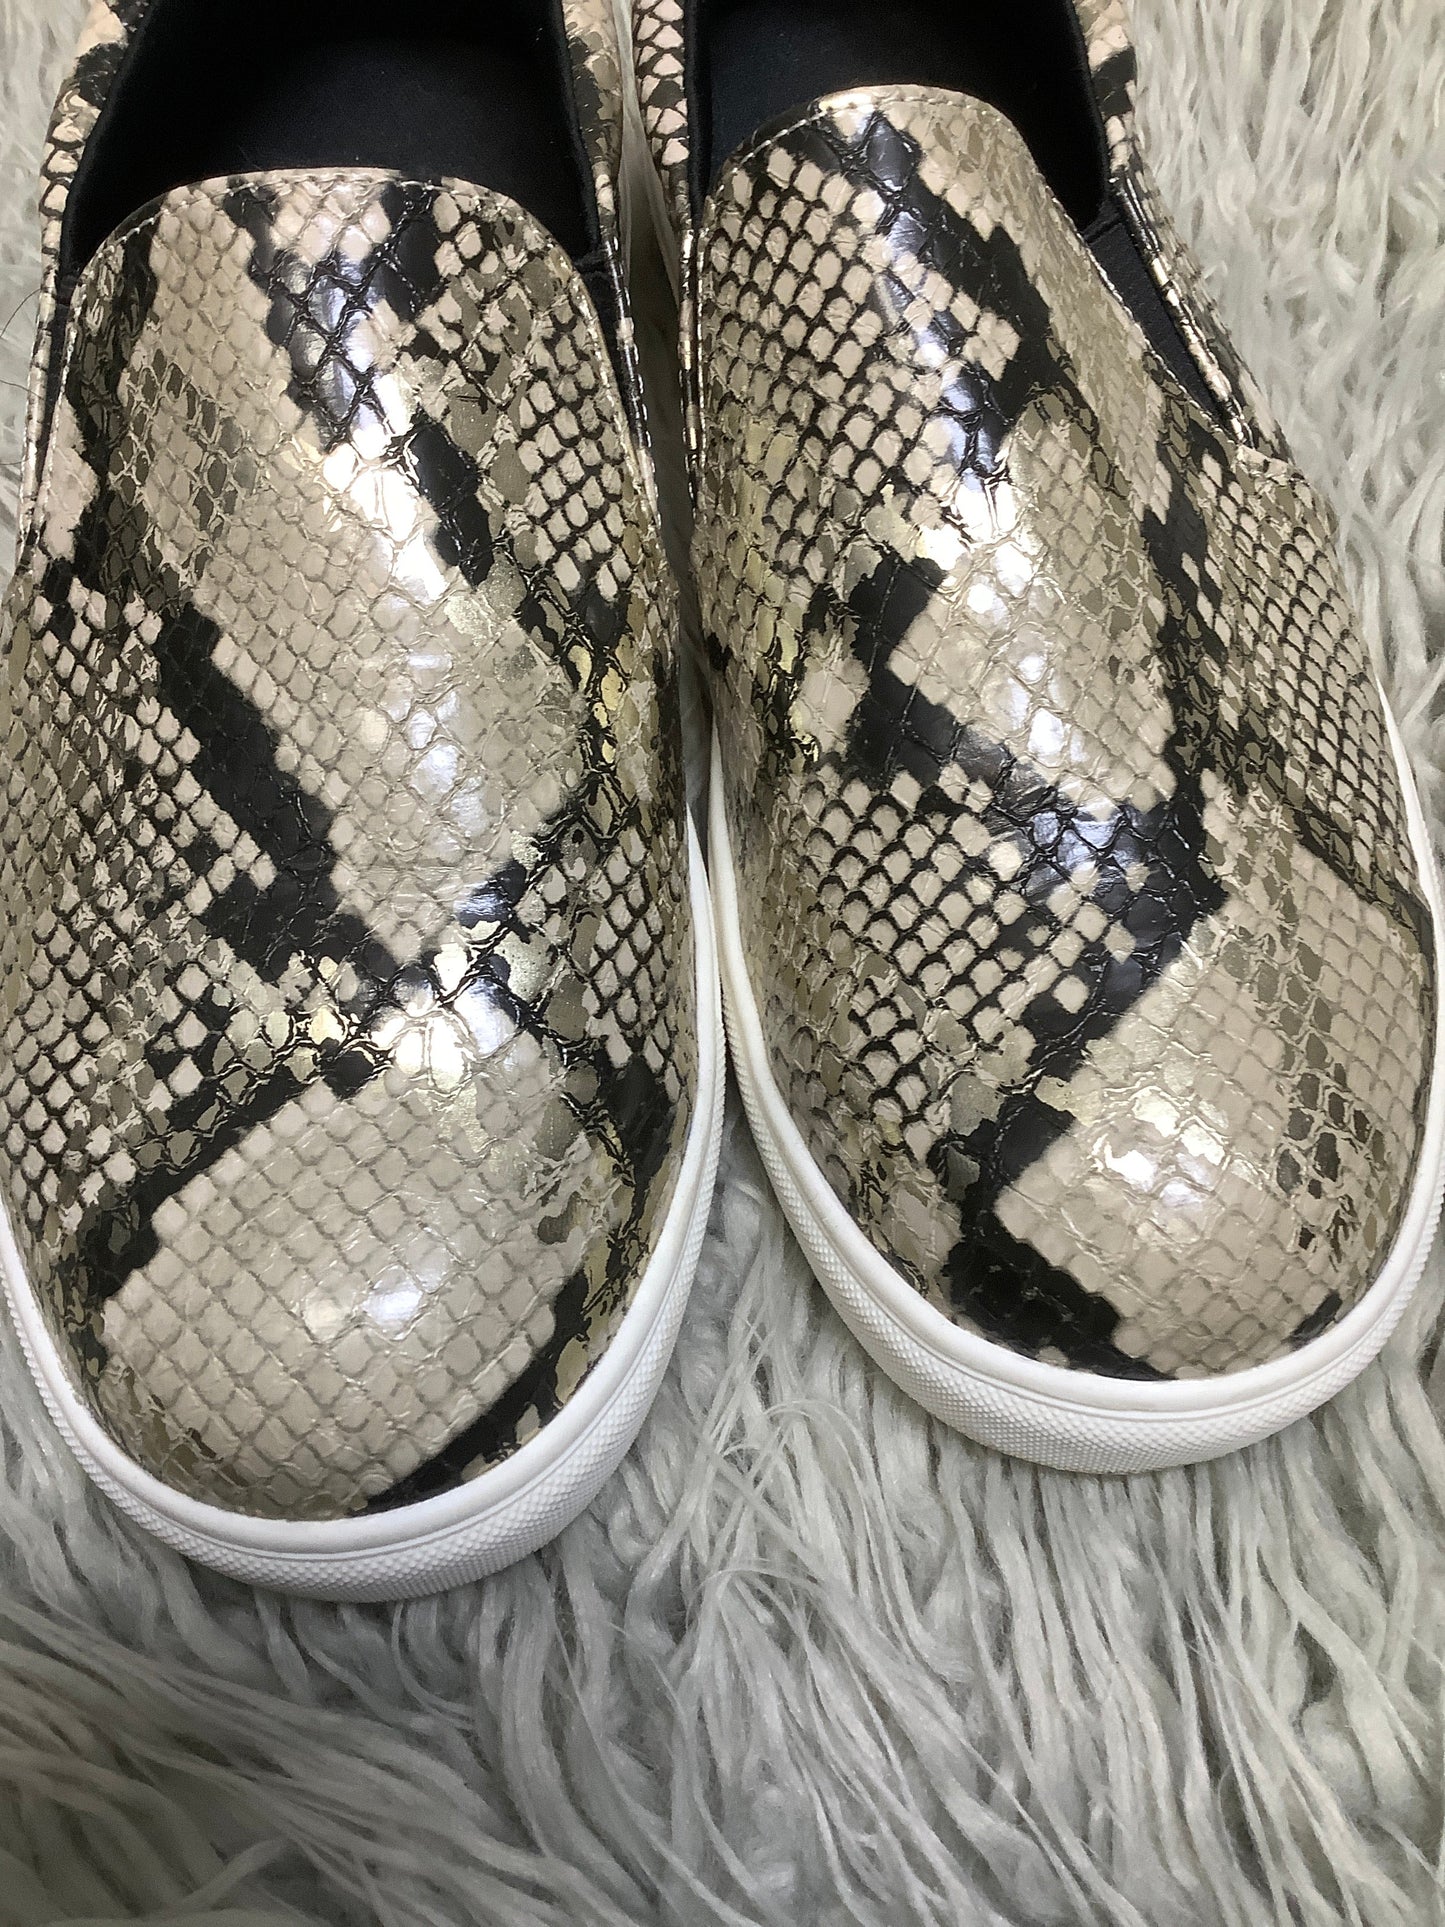 Snakeskin Print Shoes Flats Torrid, Size 7.5